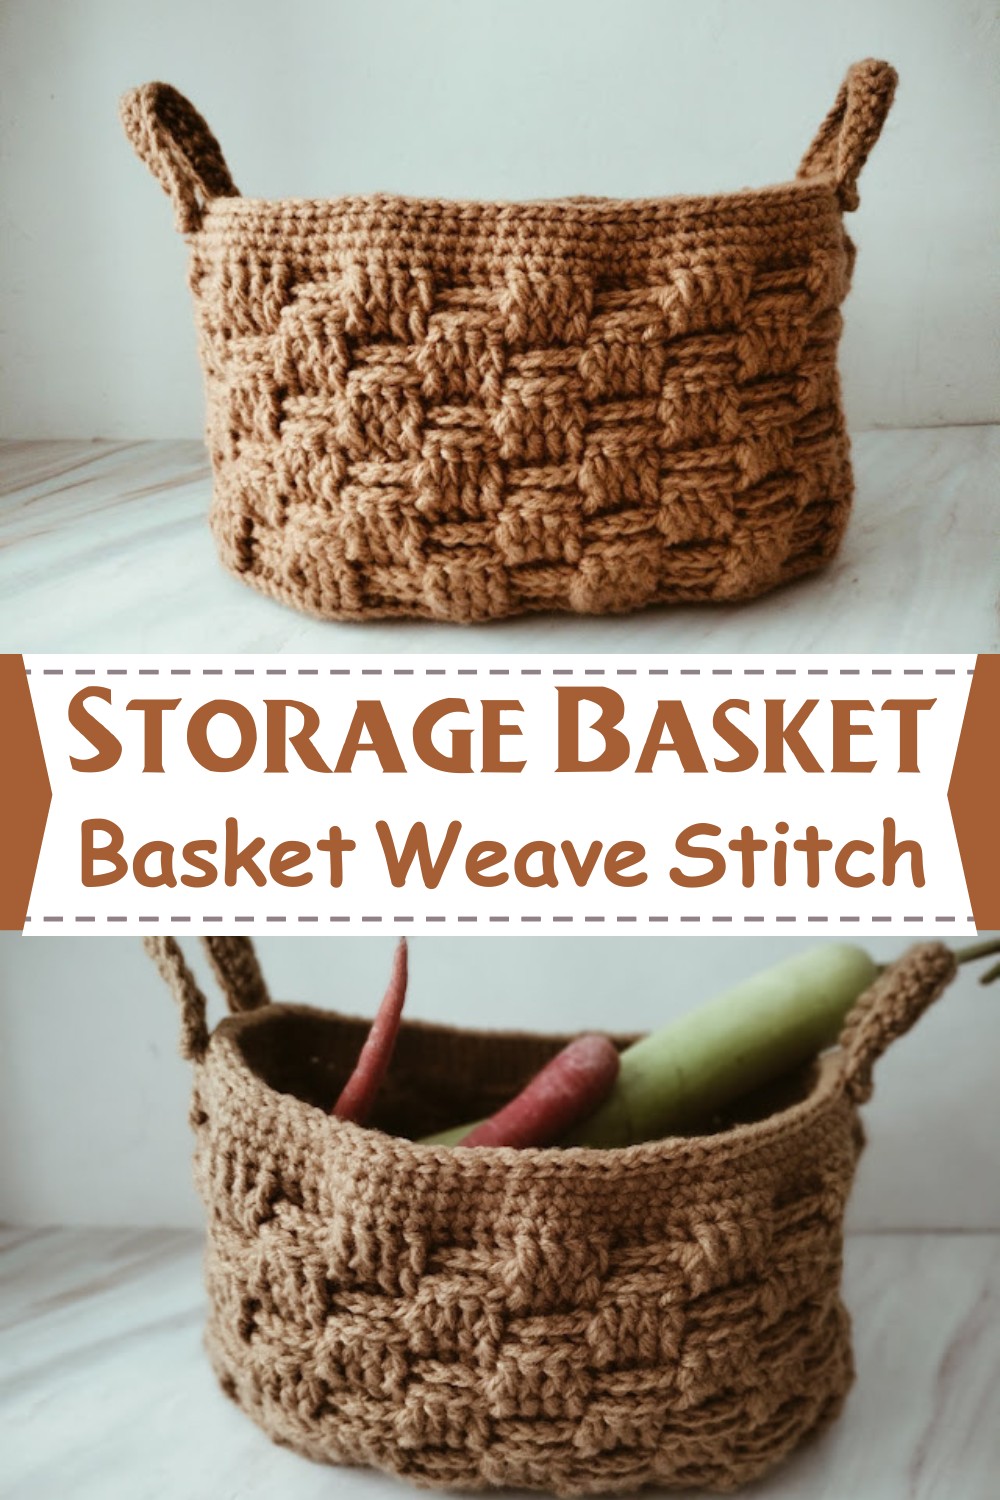 Crochet Storage Basket Using The Basket Weave Stitch